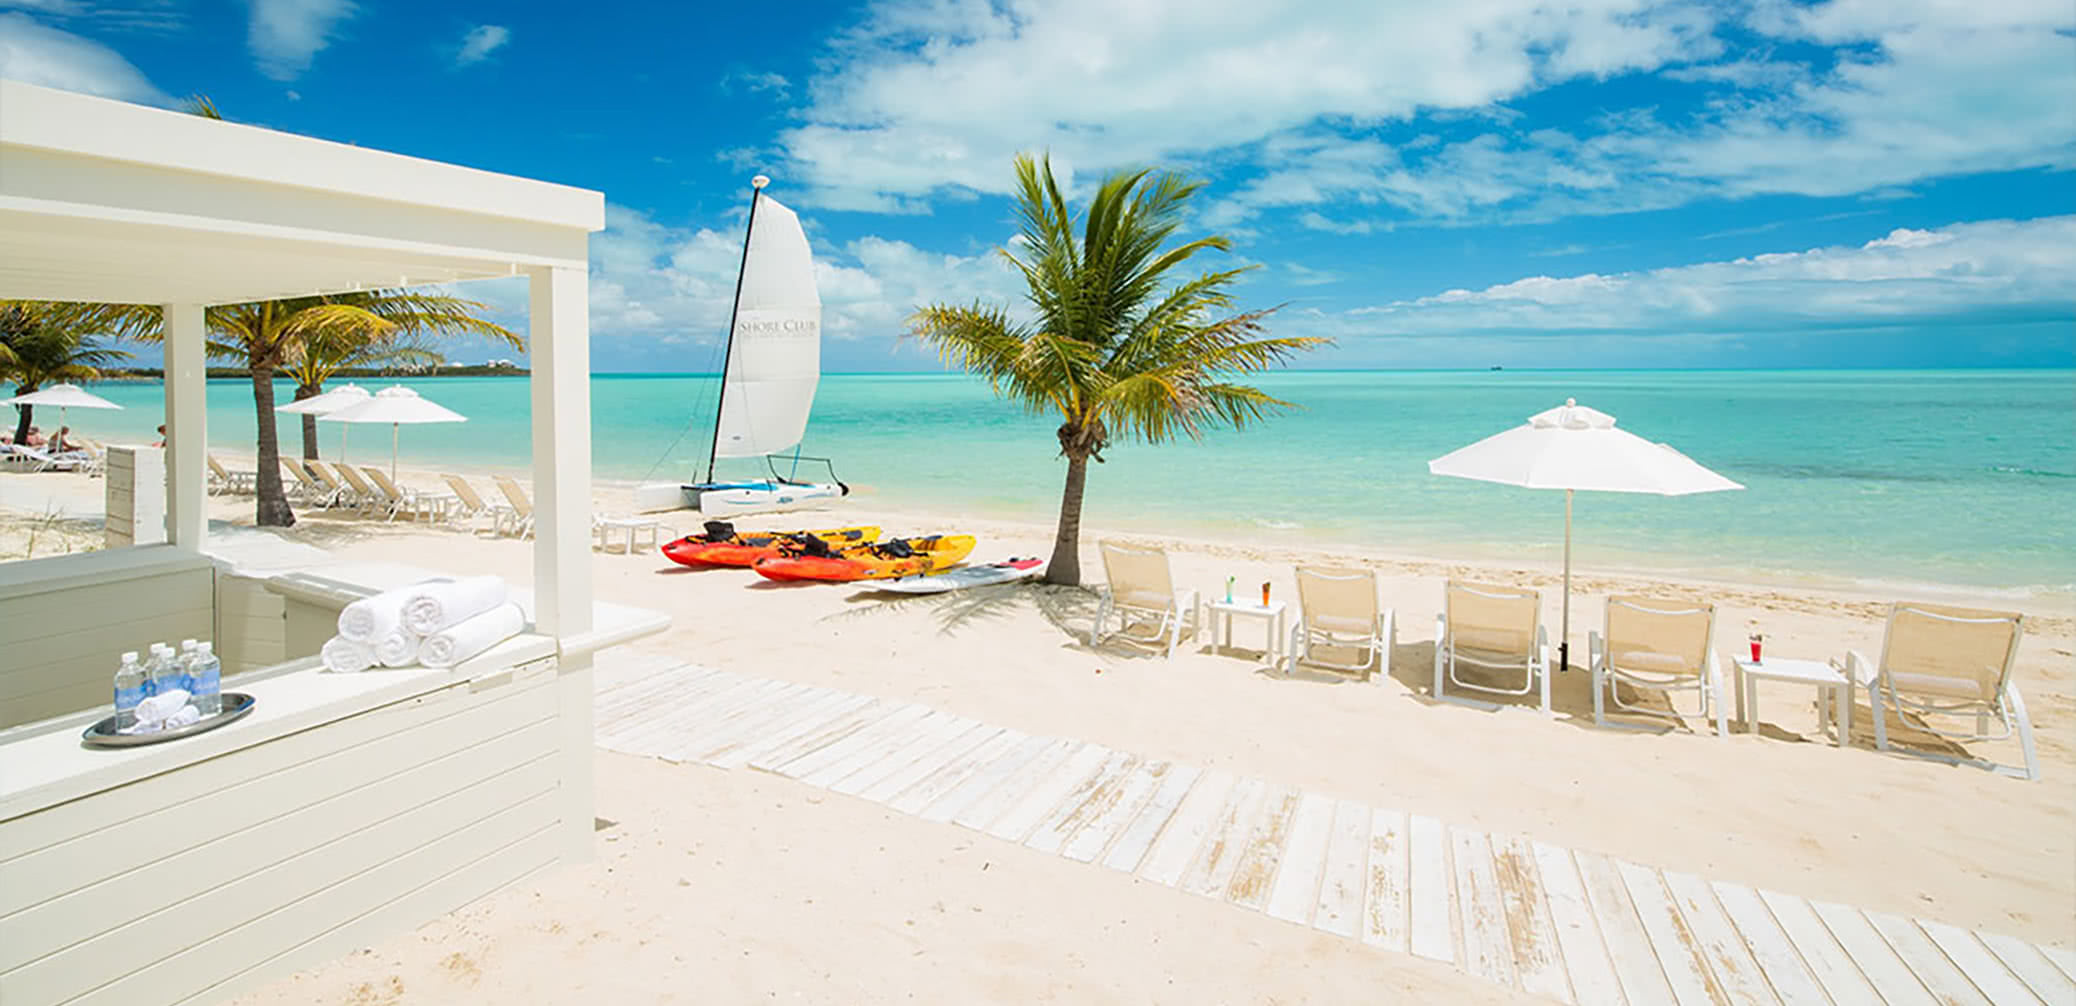 The Shore Club Vs. Ritz-Carlton Turks & Caicos: Which Is Best?